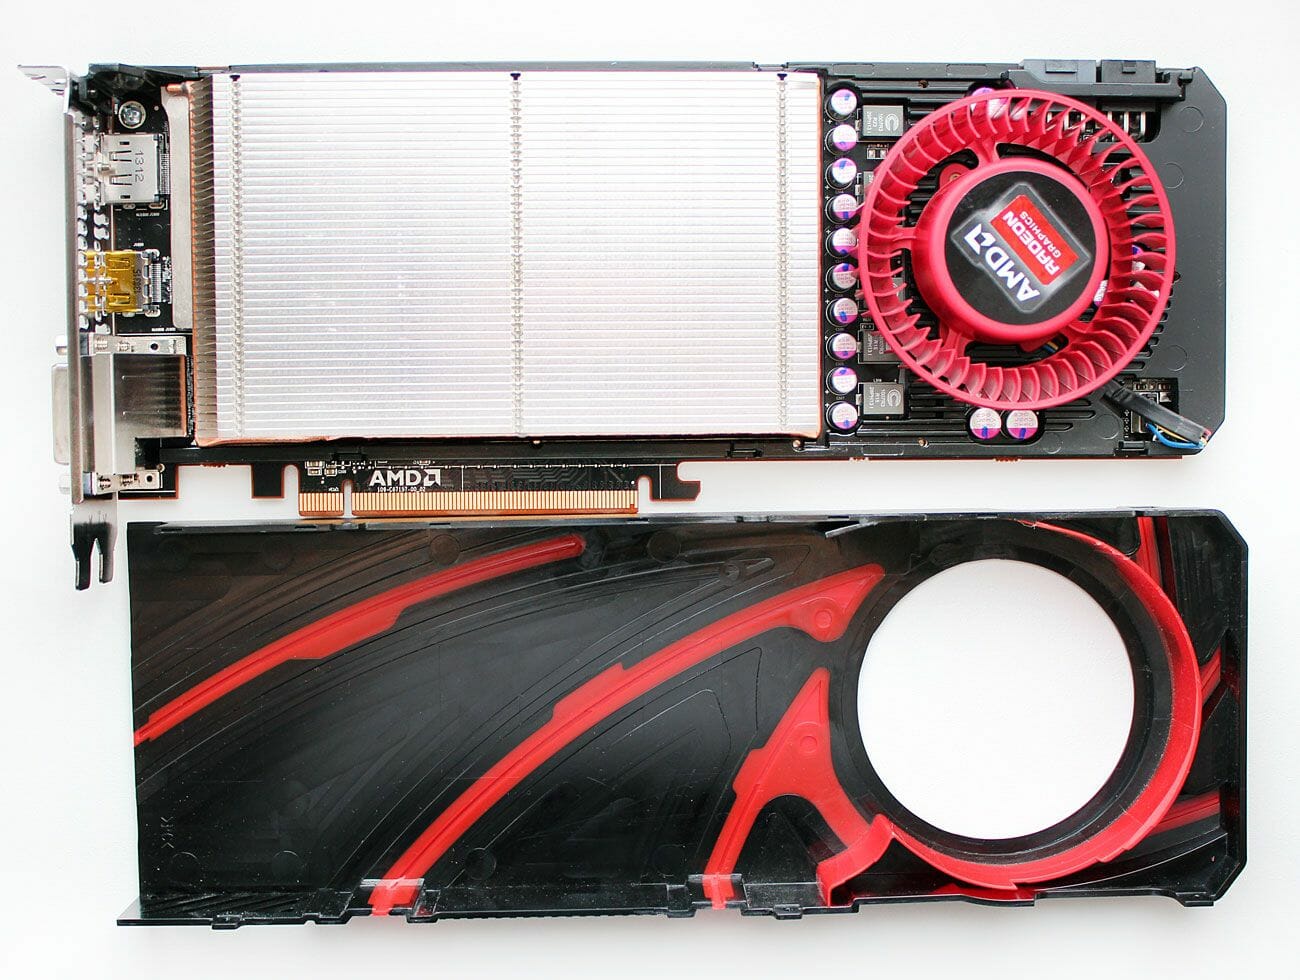 16 AMD Radeon R9 200